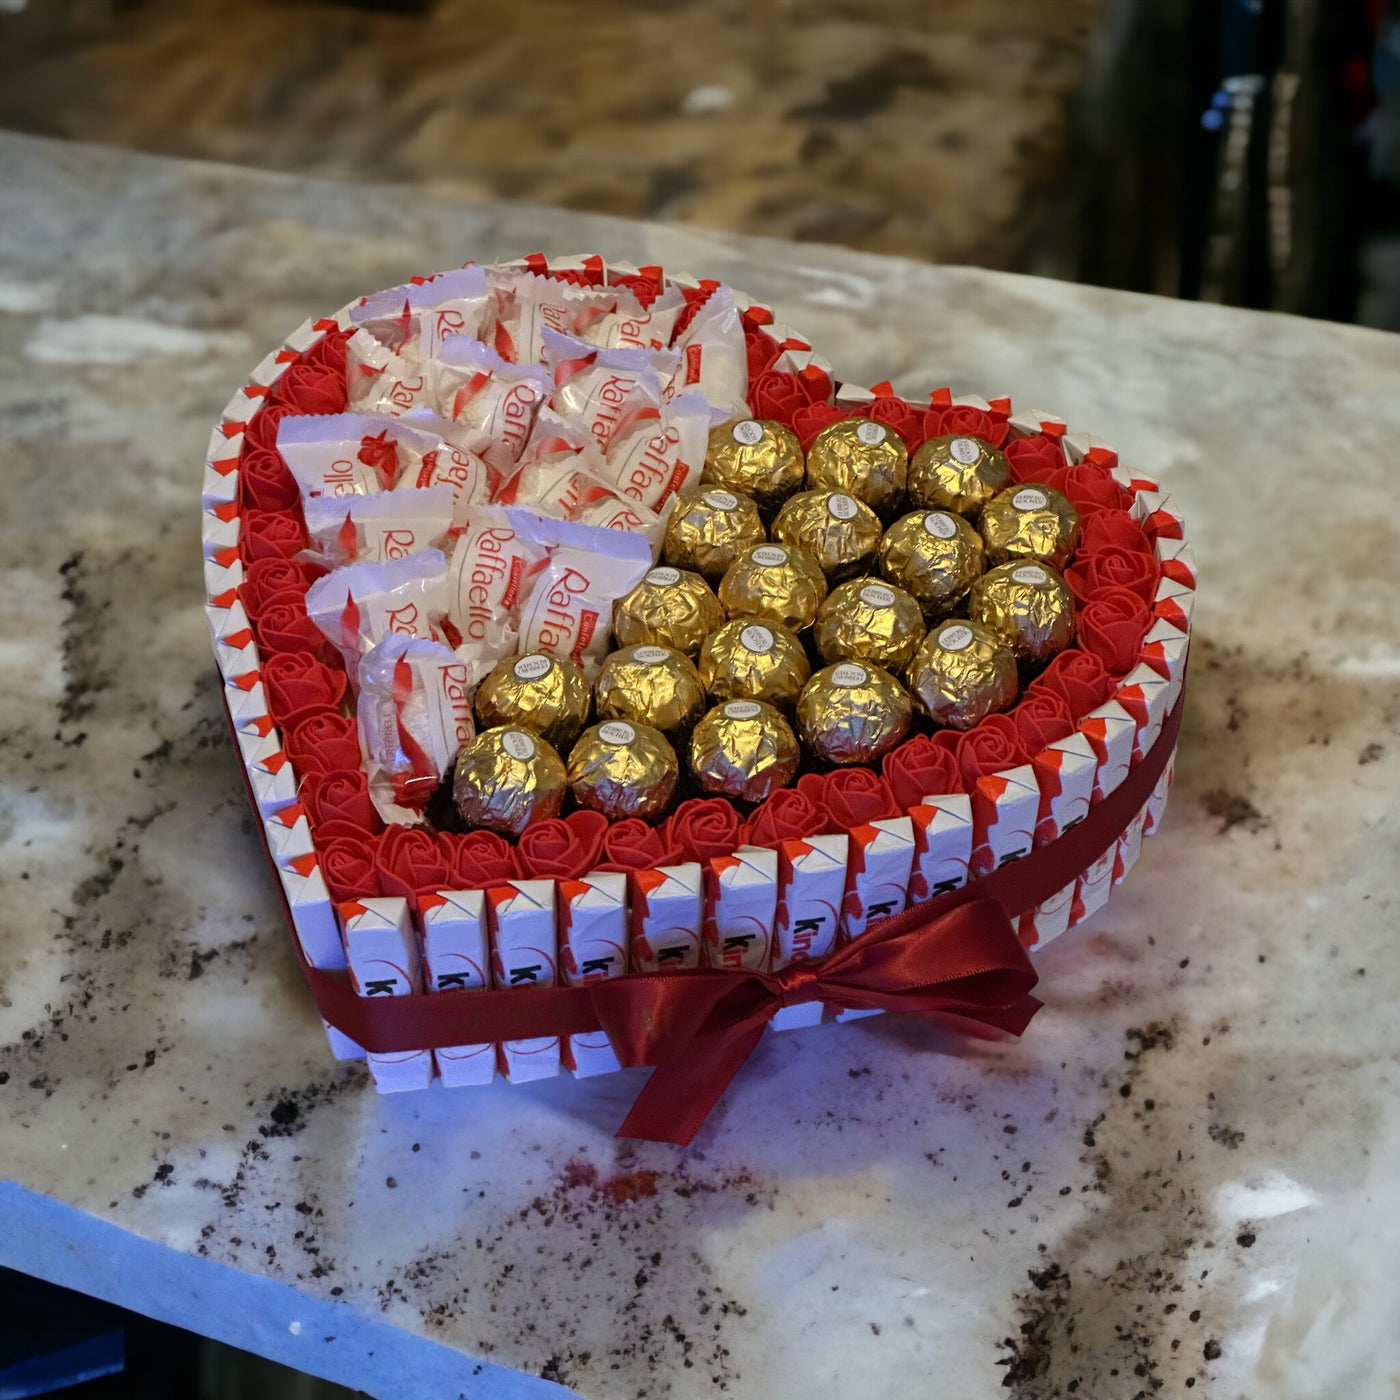 Chocolat box